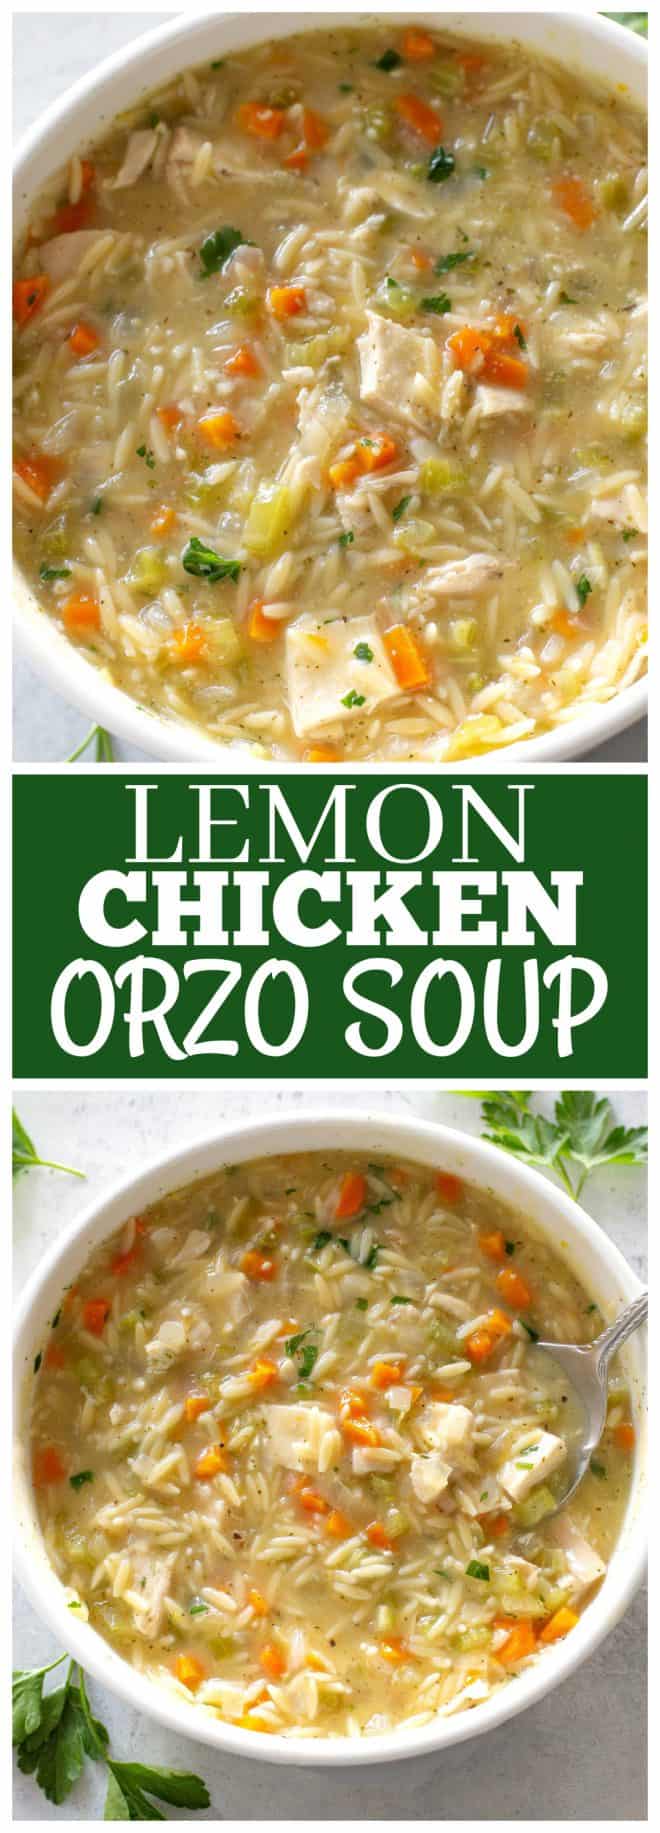 fb image - Lemon Chicken Orzo Soup